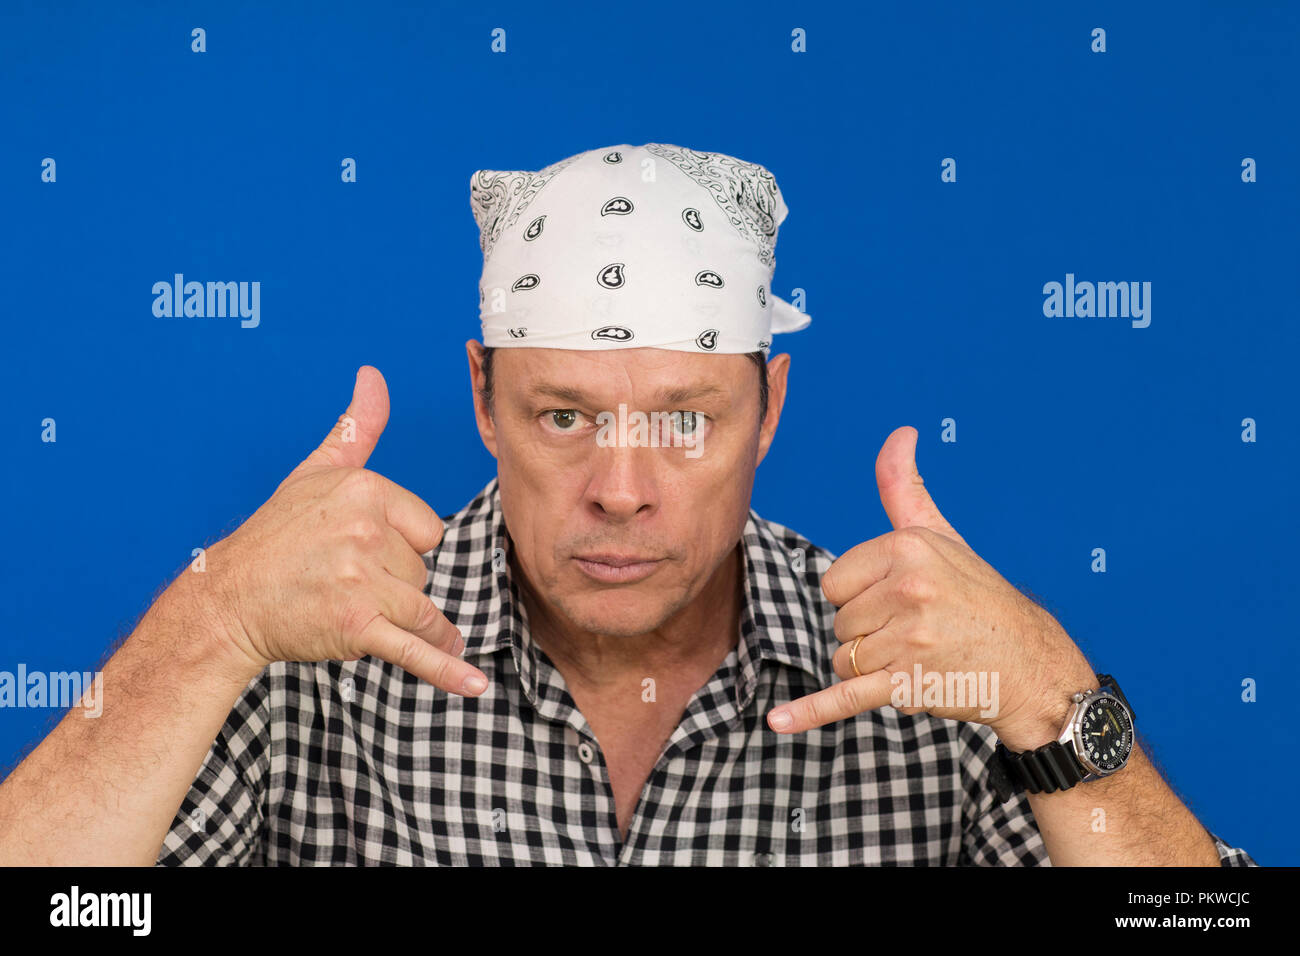 Male plaid shirt and white headband gesturing Stock Photo